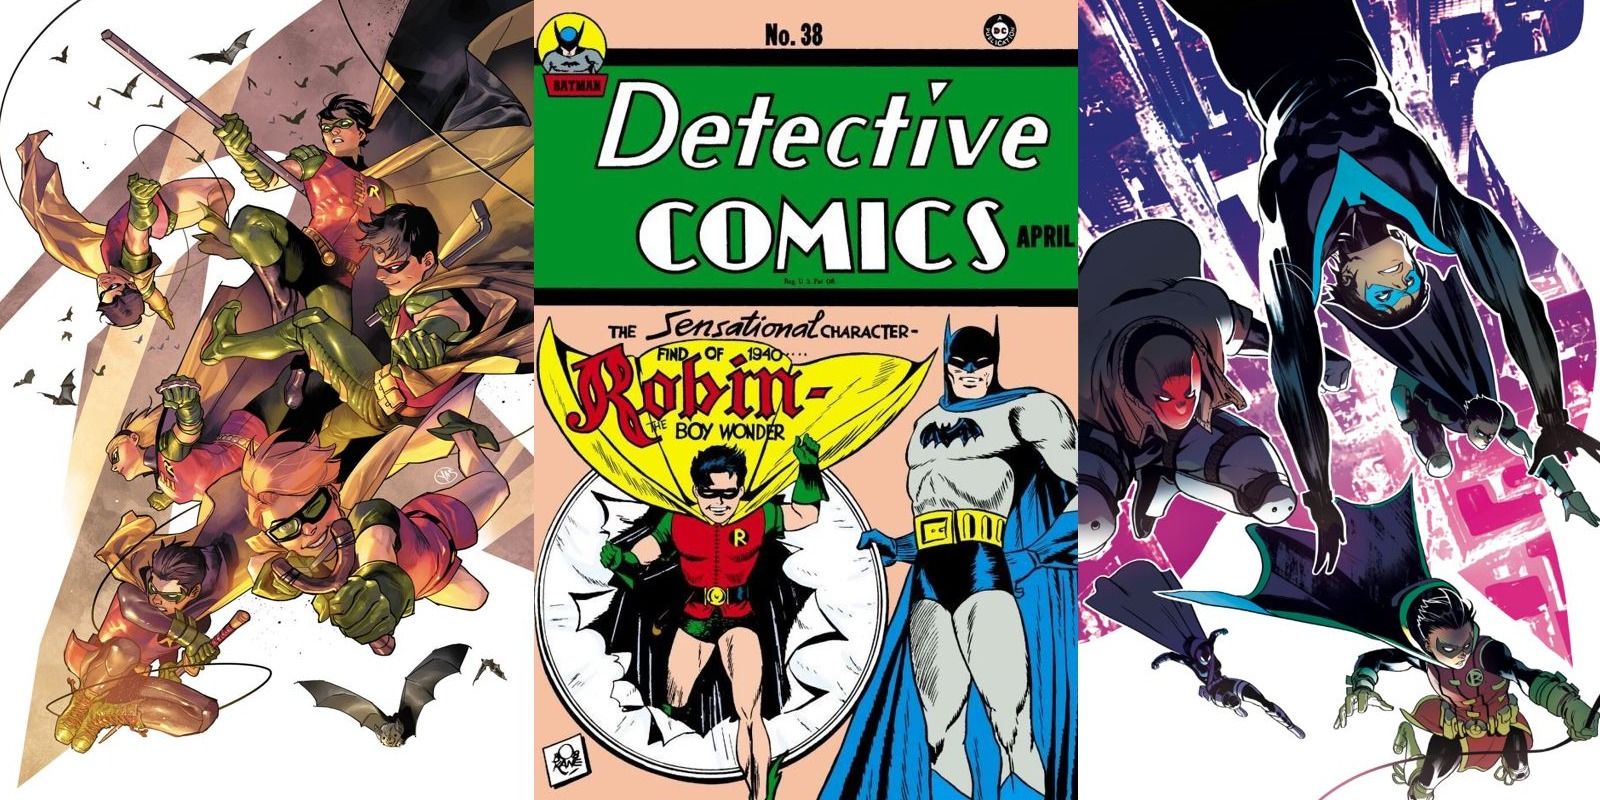 three way image of Robins from DC Comics like Dick Grayson, Jason Todd, and Damian Wayne